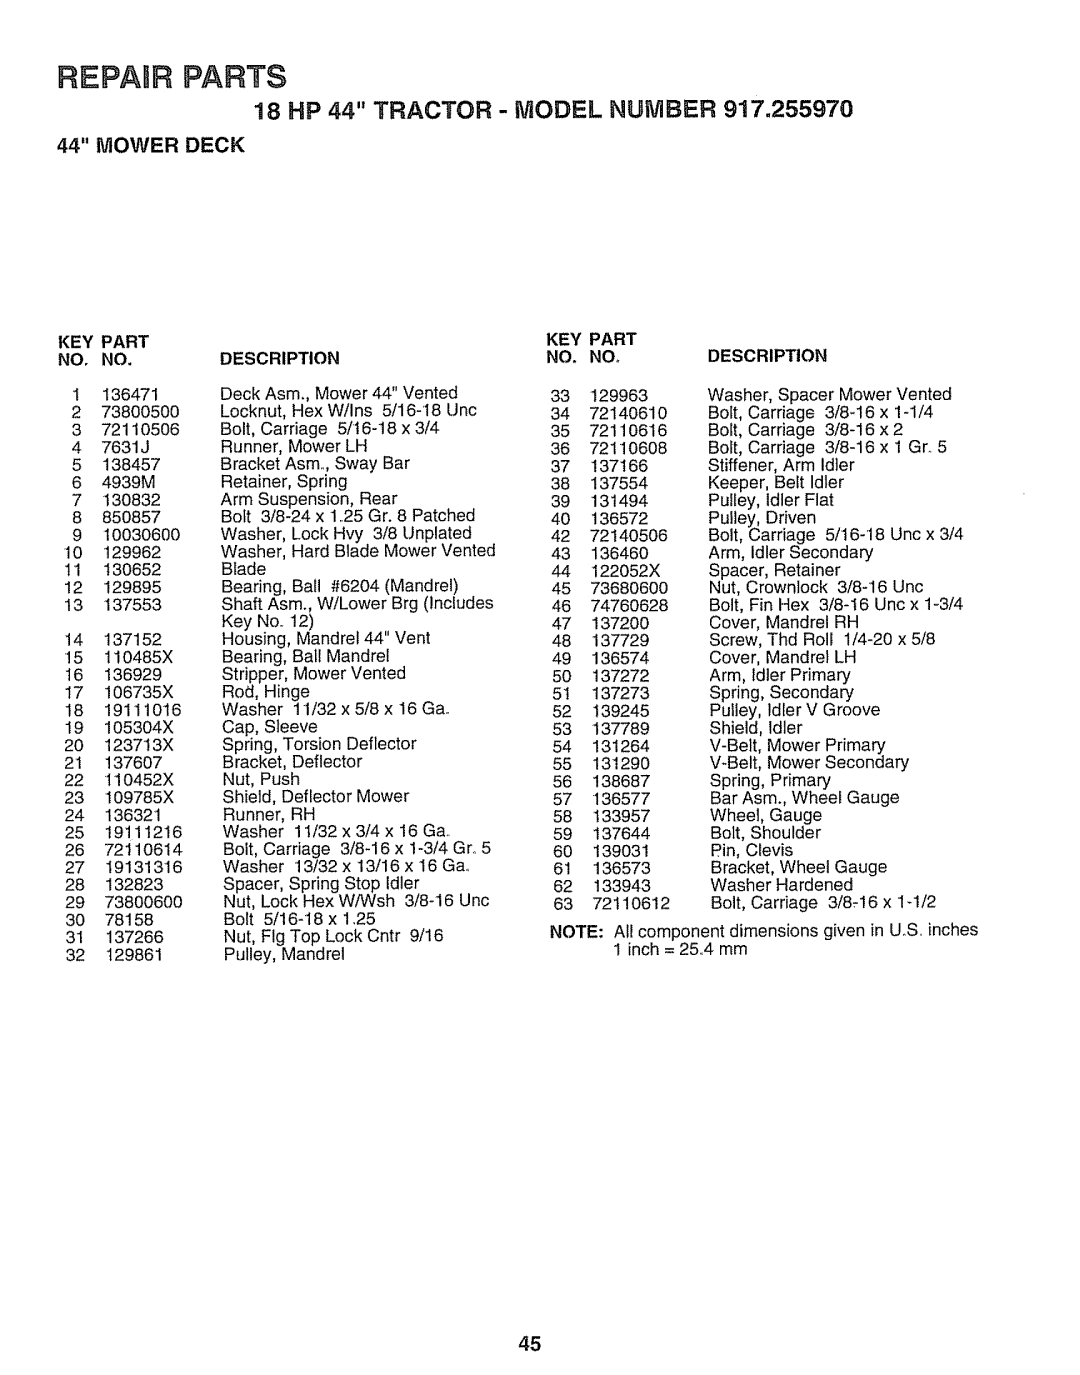 Sears 917.25597 owner manual Reparr Parts, 18 HP 44 TRACTOR - MODEL NUMBER, Key Part, Description, idler 